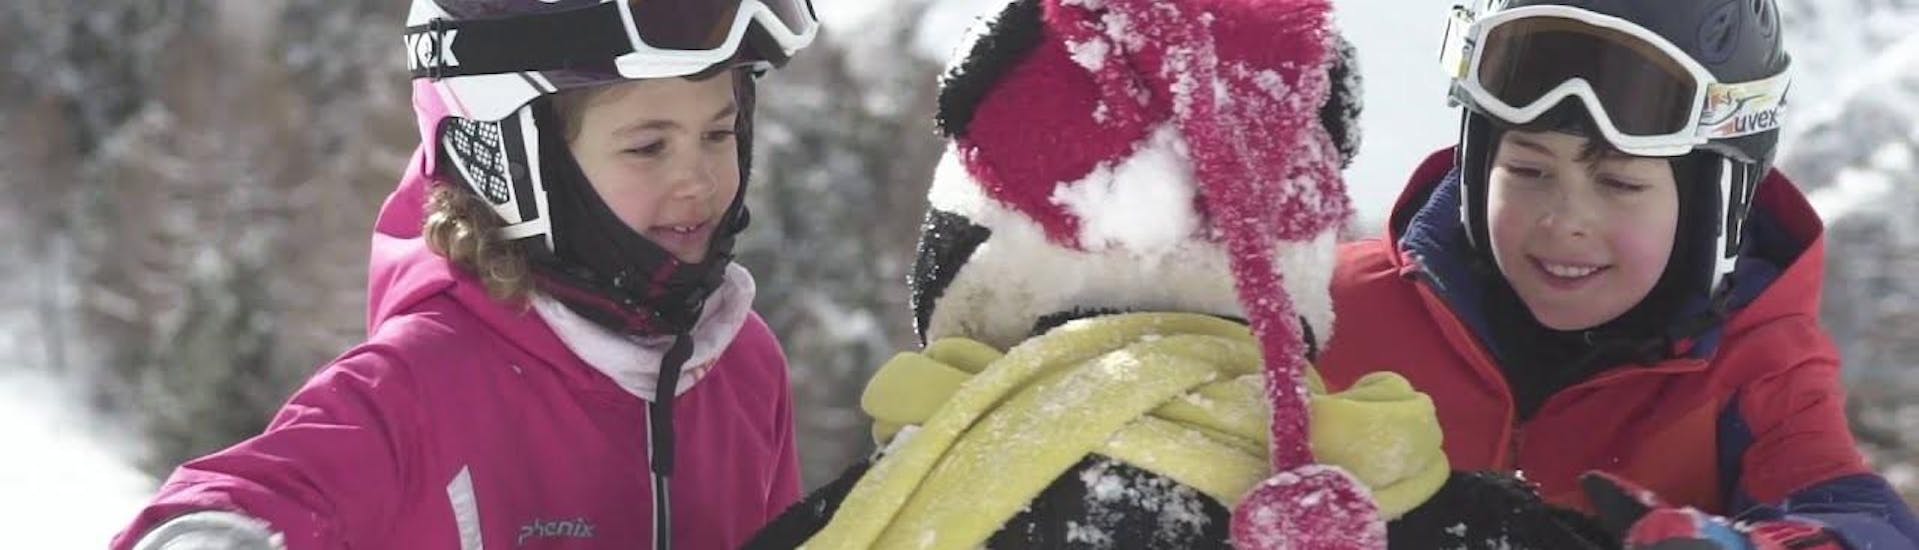 Two children hug the mascot Bobi after successful kids ski lessons with the Ski School Grächen.